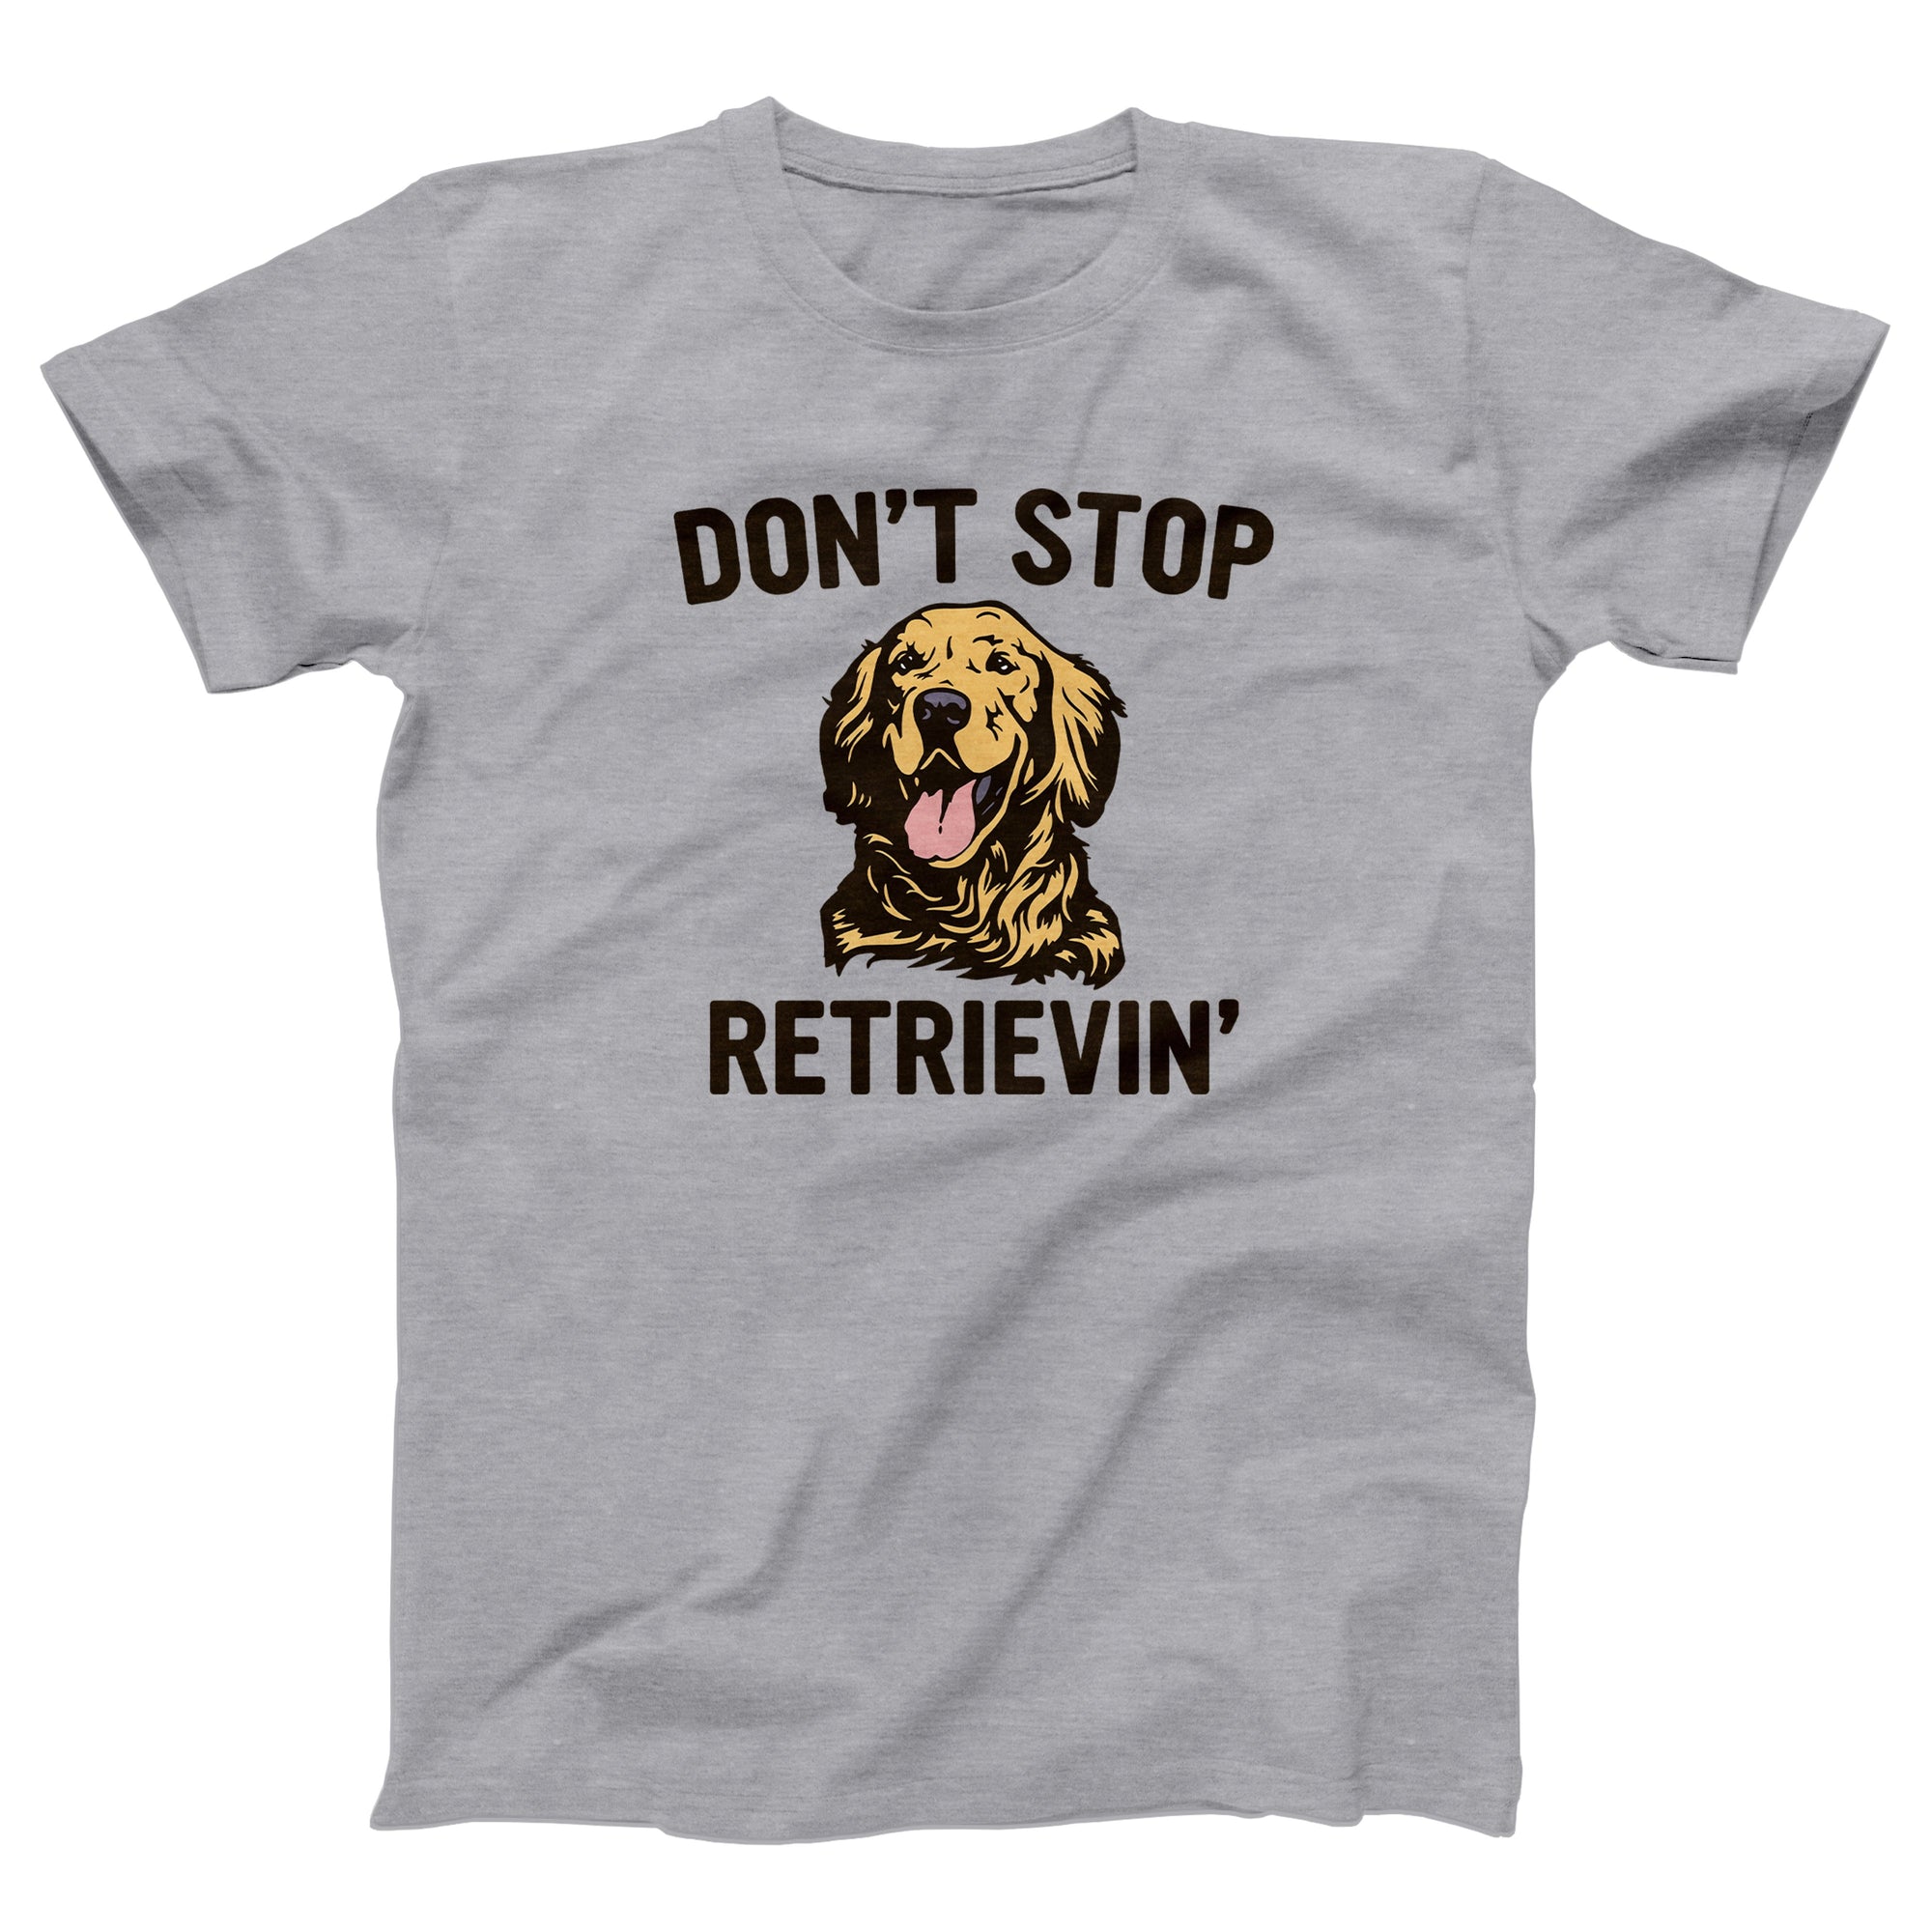 Don't Stop Retrievin' Adult Unisex T-Shirt - anishphilip